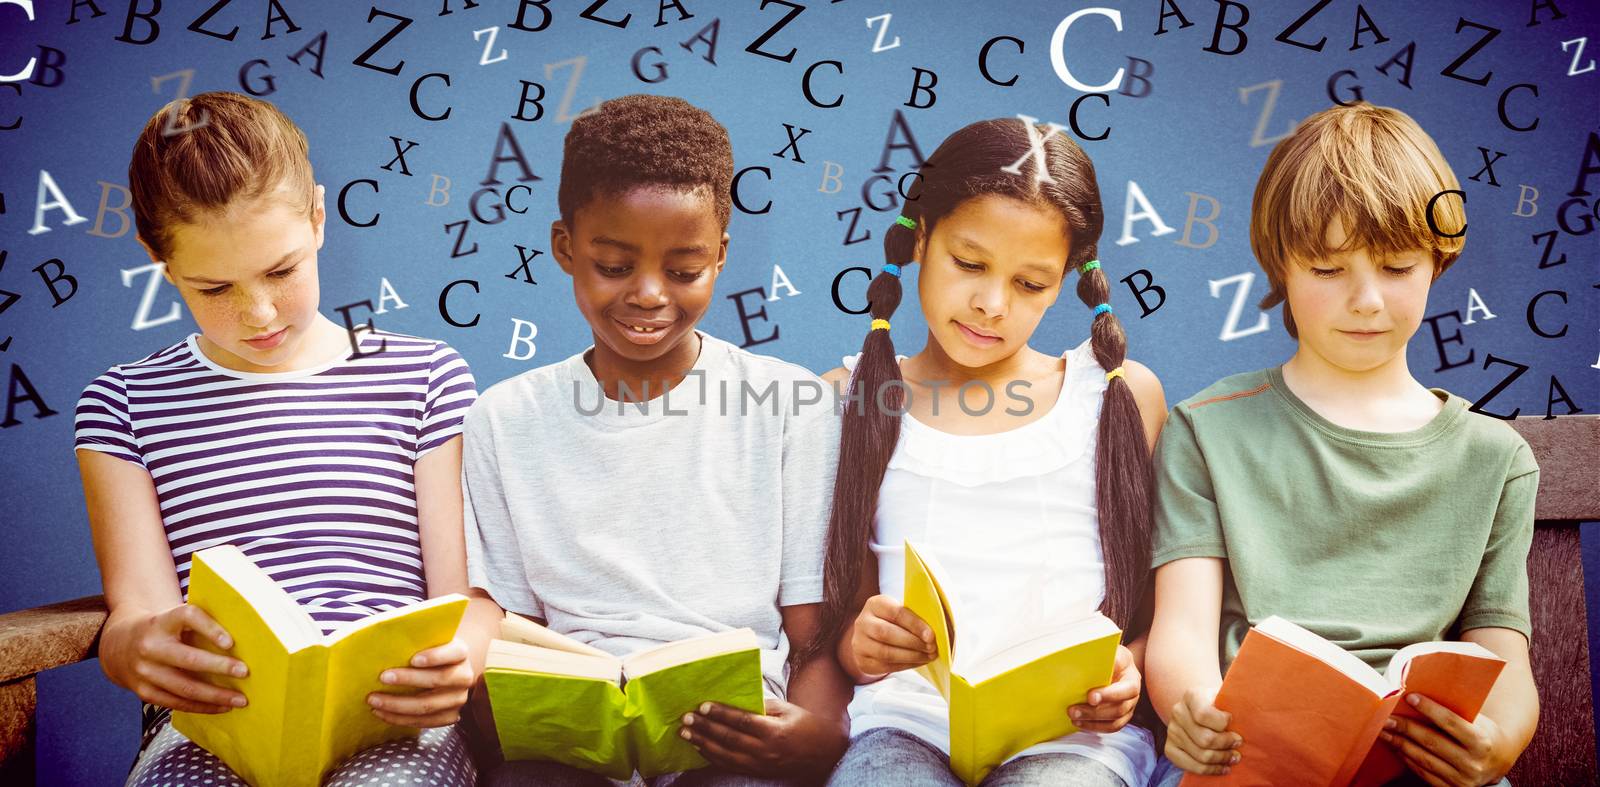 Children reading books at park against blue background